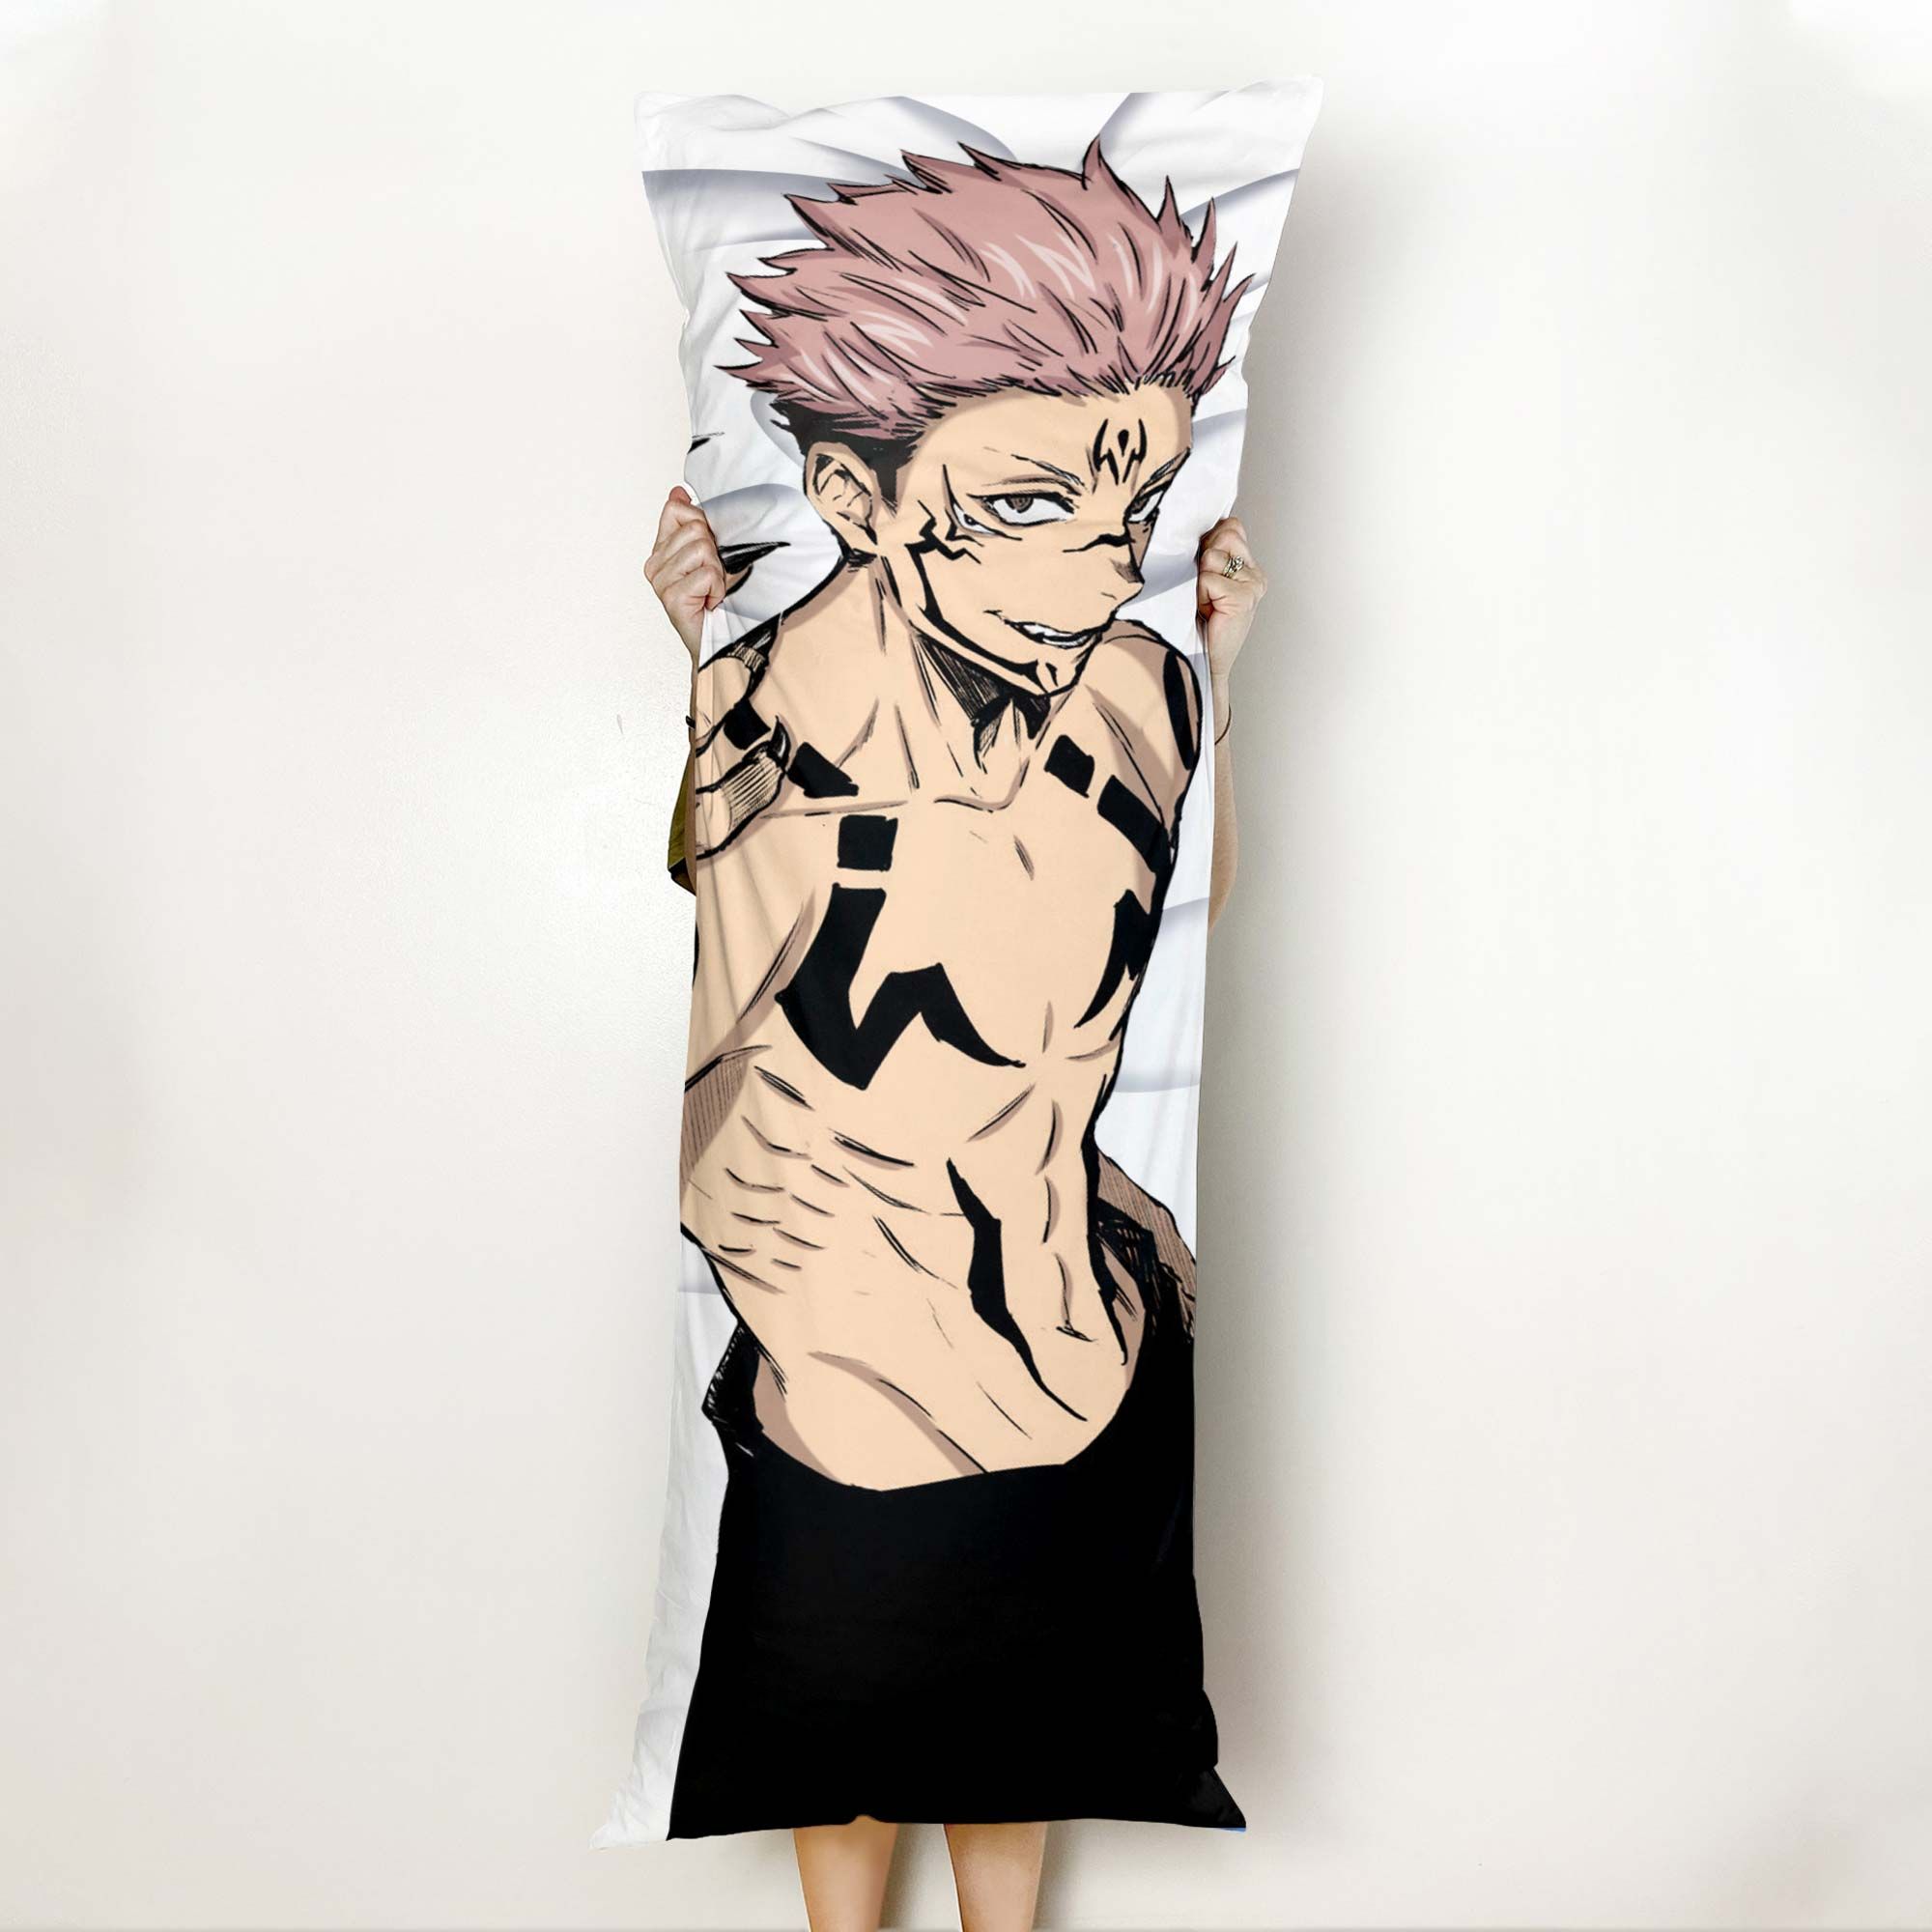 Sukuna Body Pillow Cover Custom Jujutsu Kaisen Anime Gifts Official Merch GO0110